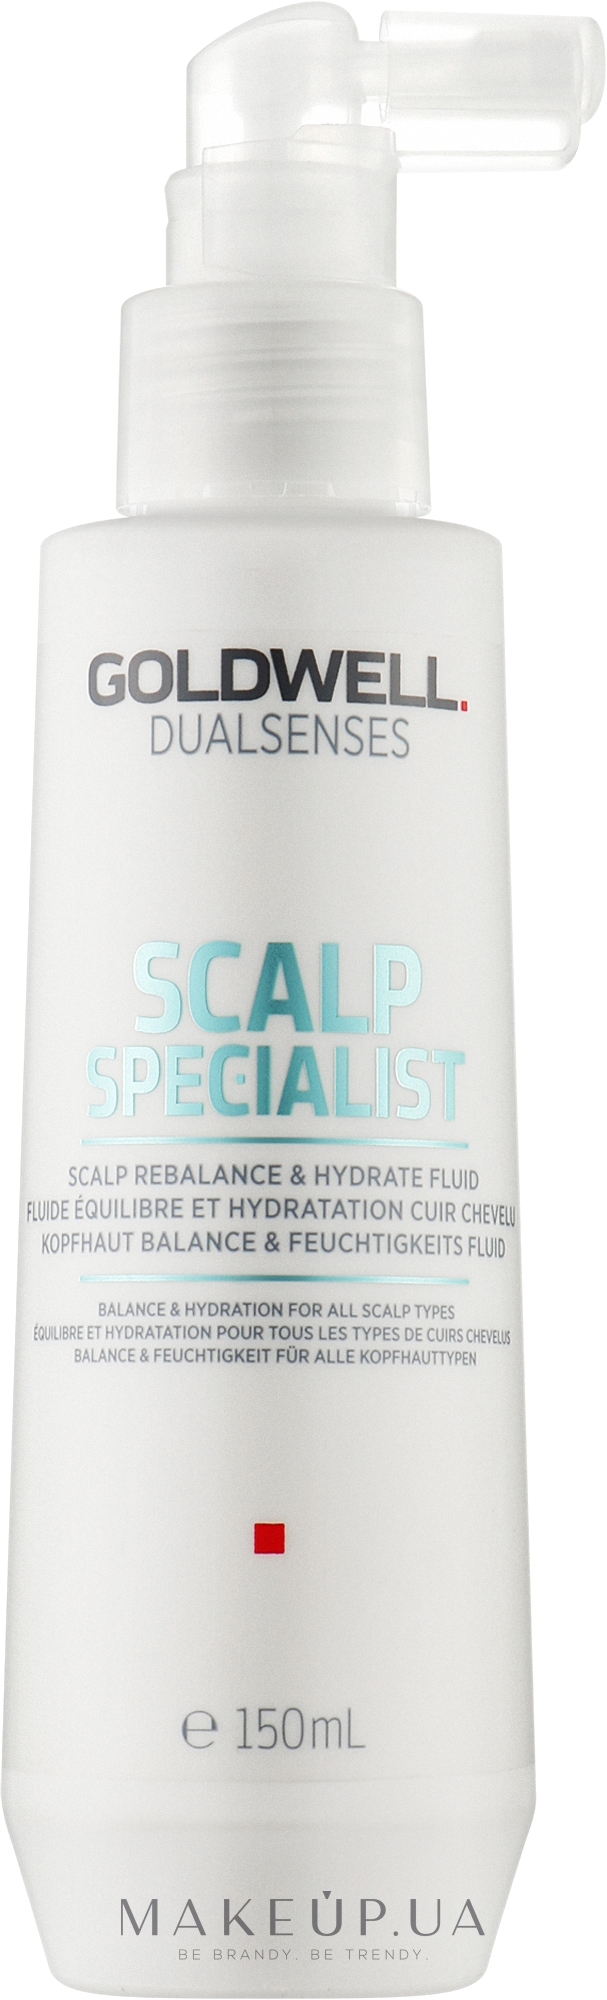 Багатофункціональний флюїд для волосся - Goldwell Dualsenses Scalp Specialist Rebalance & Hydrate Fluid — фото 150ml